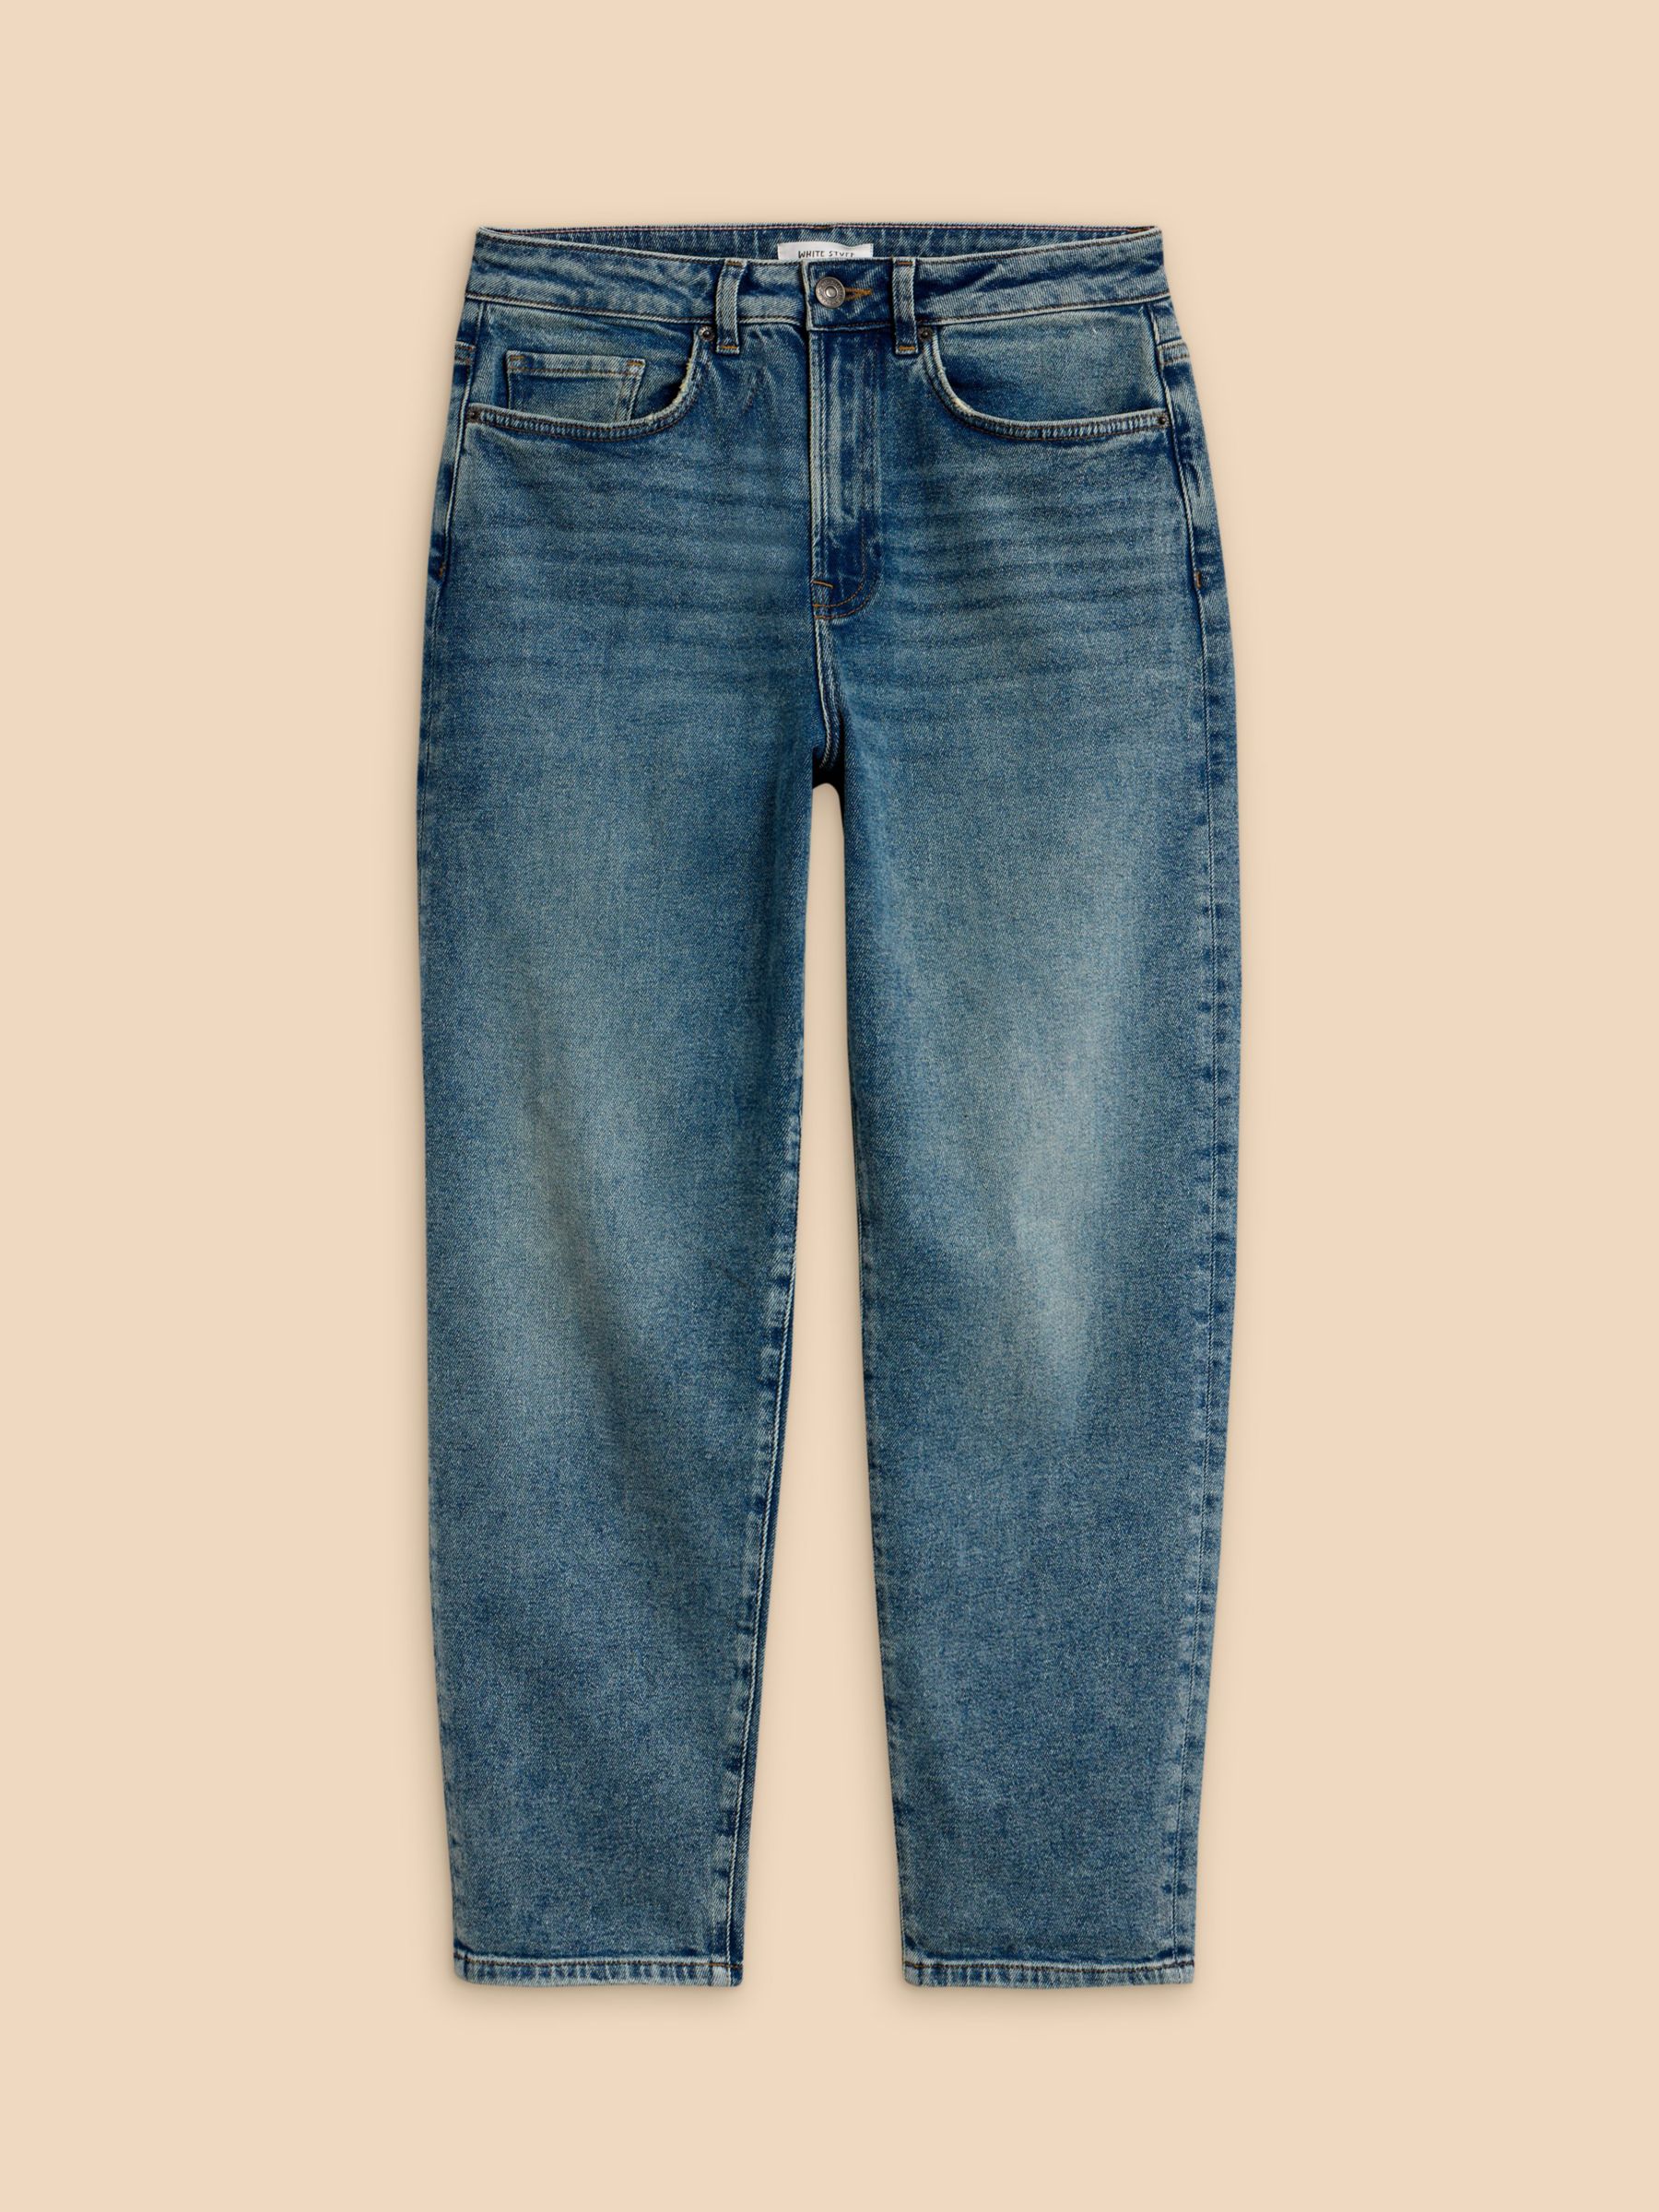 White Stuff Tilly Tapered Jeans, Mid Denim, 20S